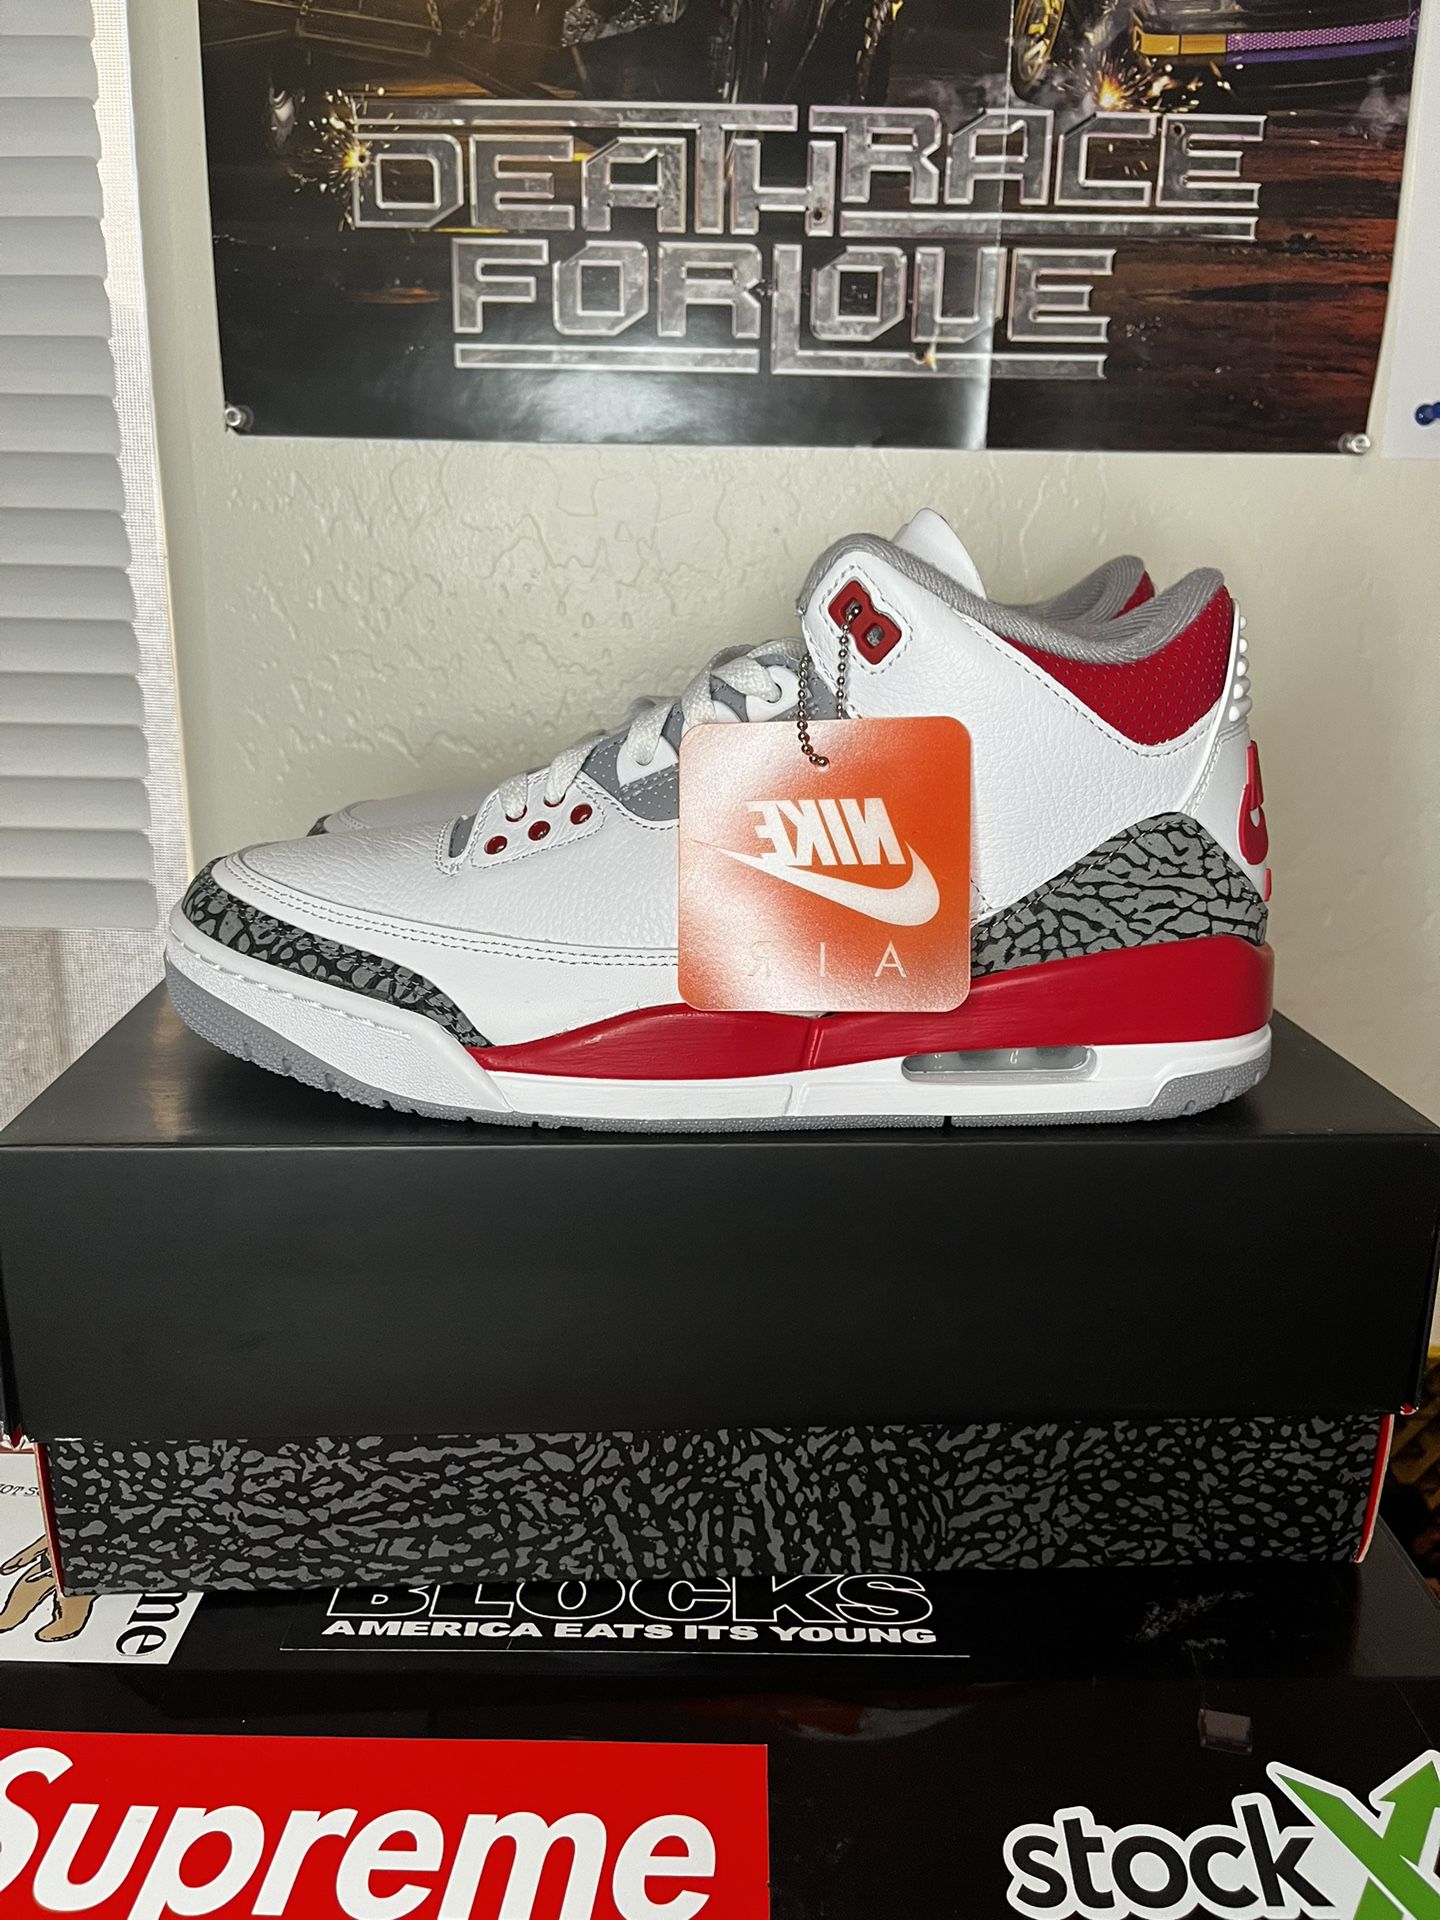 Jordan 3 Fire Red Size 9.5 Brand new